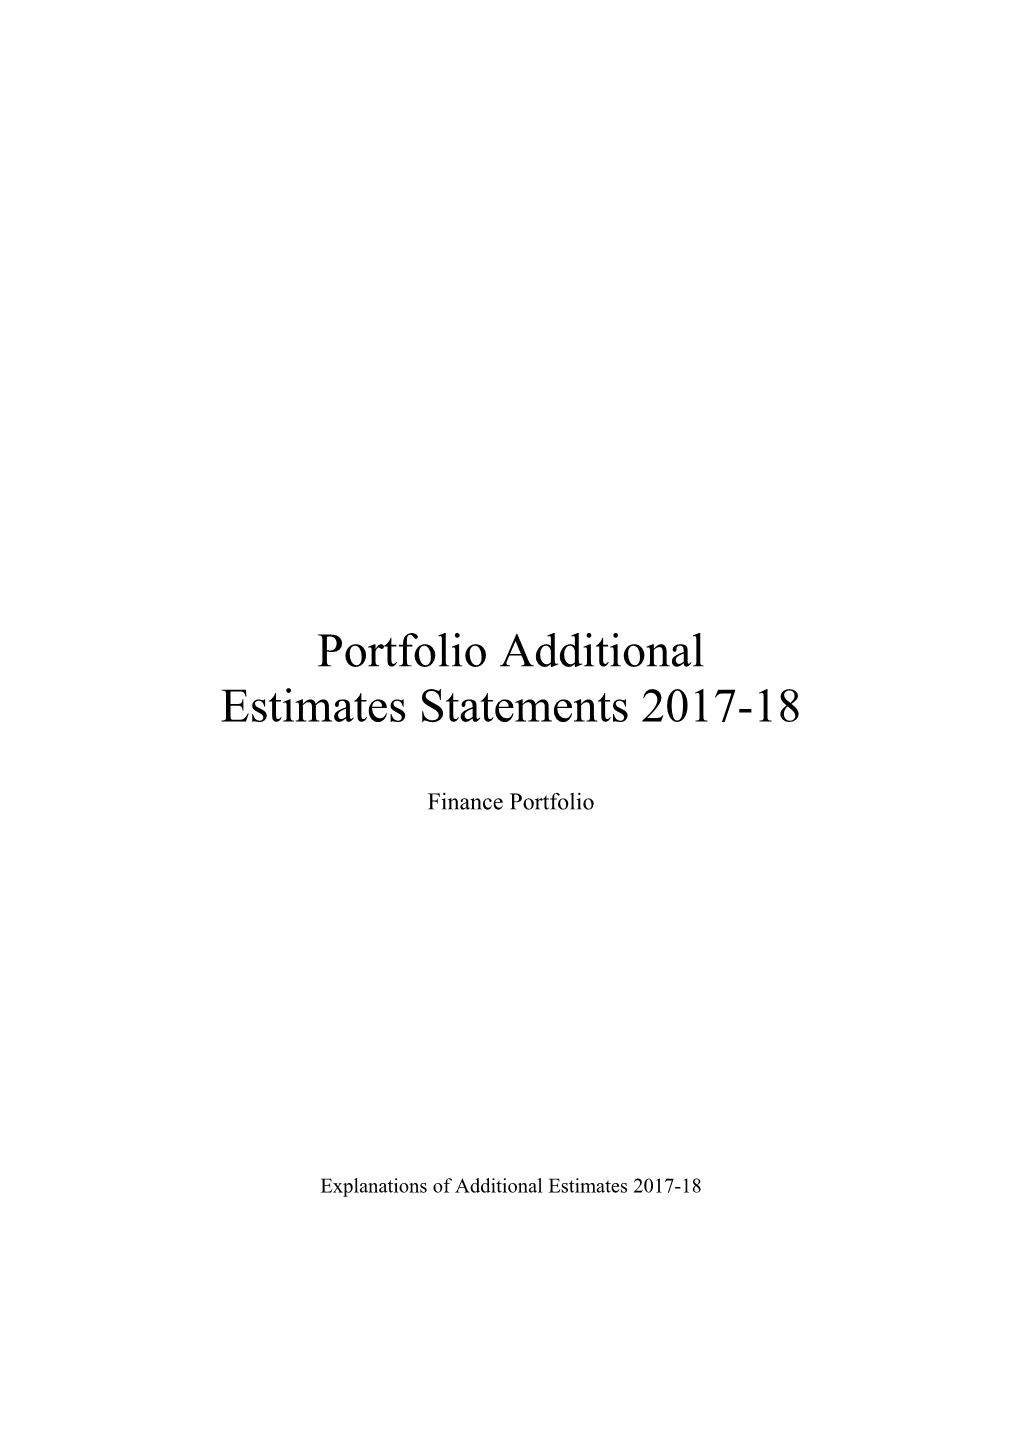 Portfolio Additional Estimates Statements 2017-18